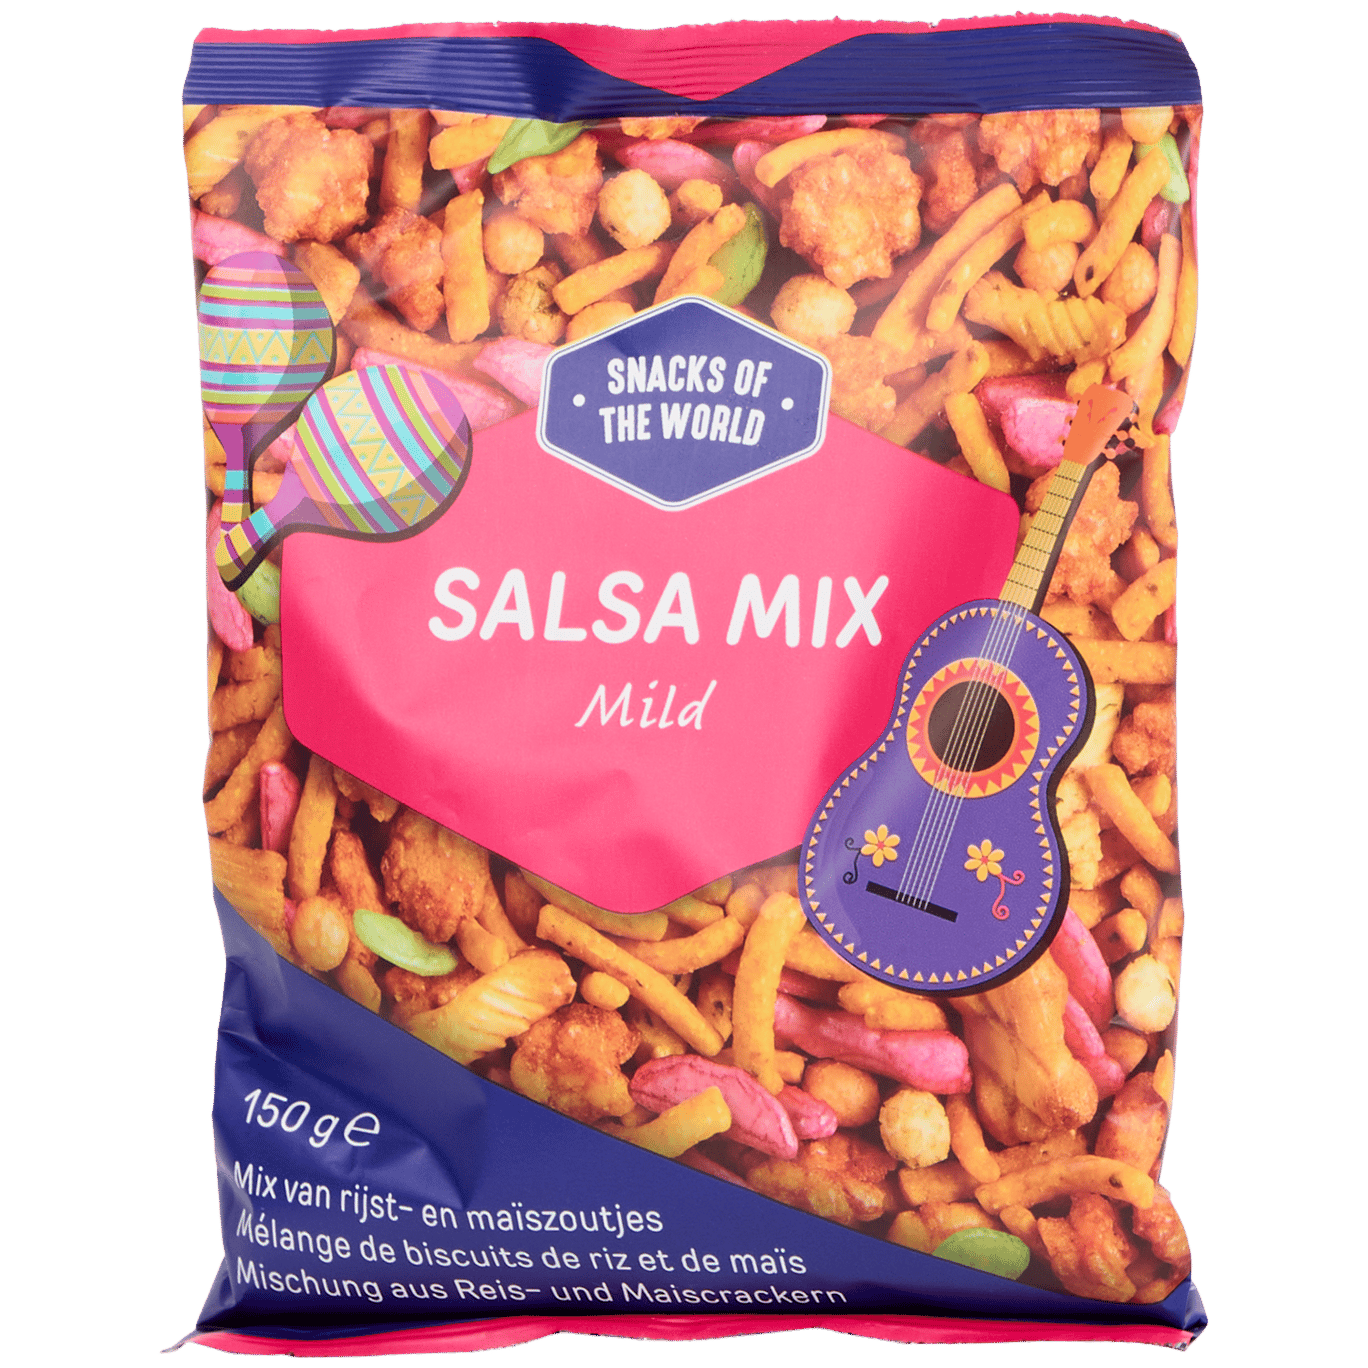 Snacks of the World Salsa Mix Mild